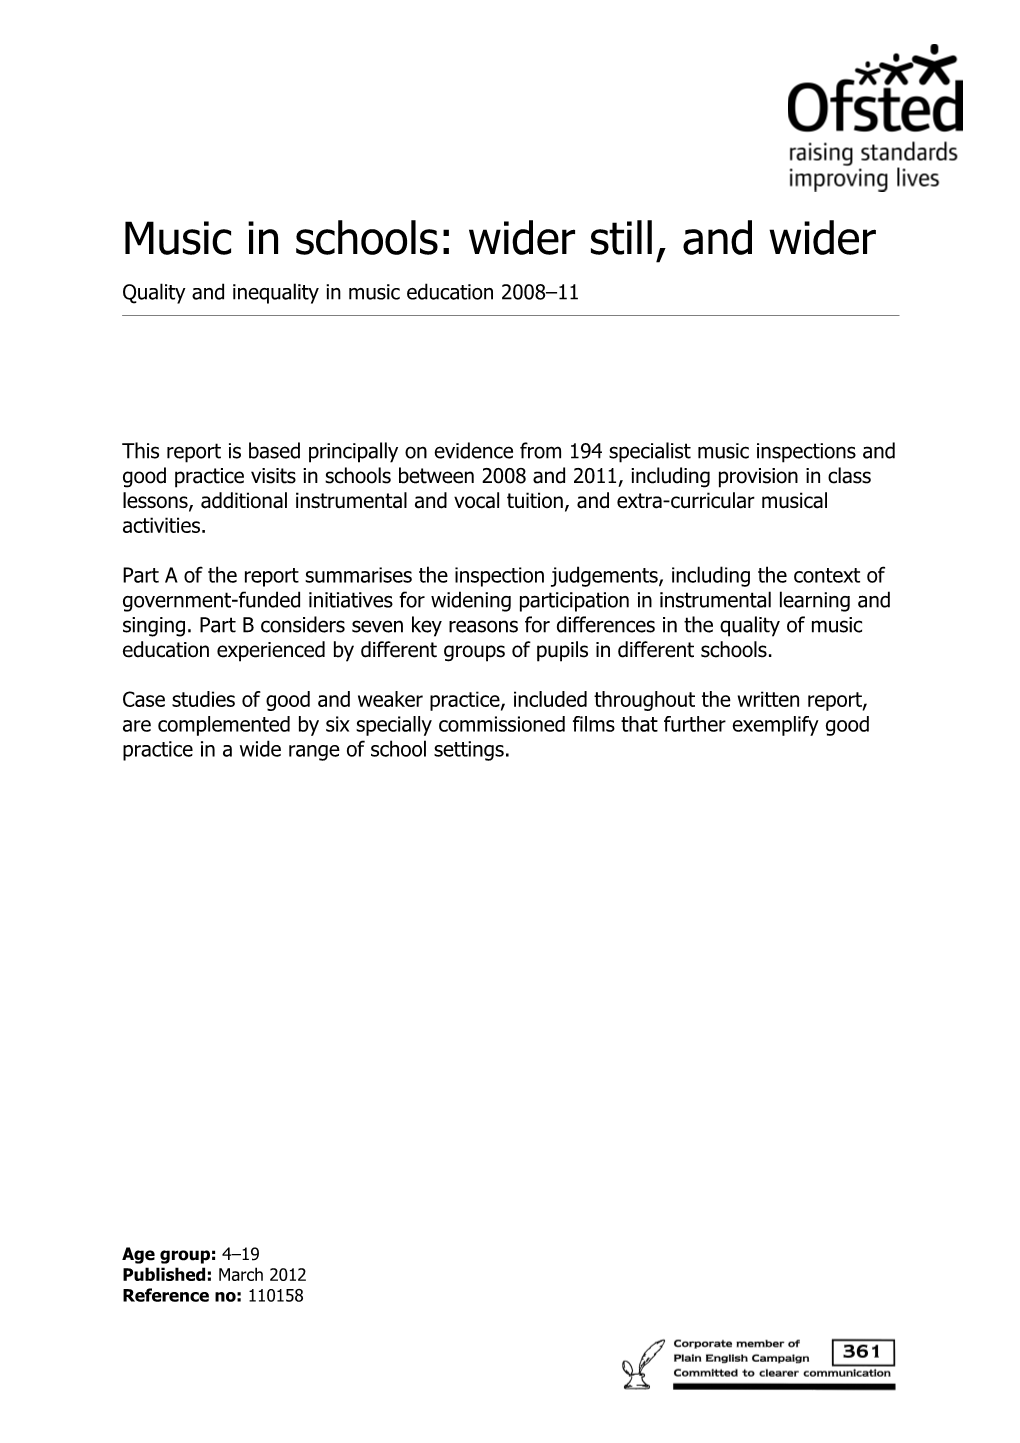 Music in Schools: Wider Still, and Wider